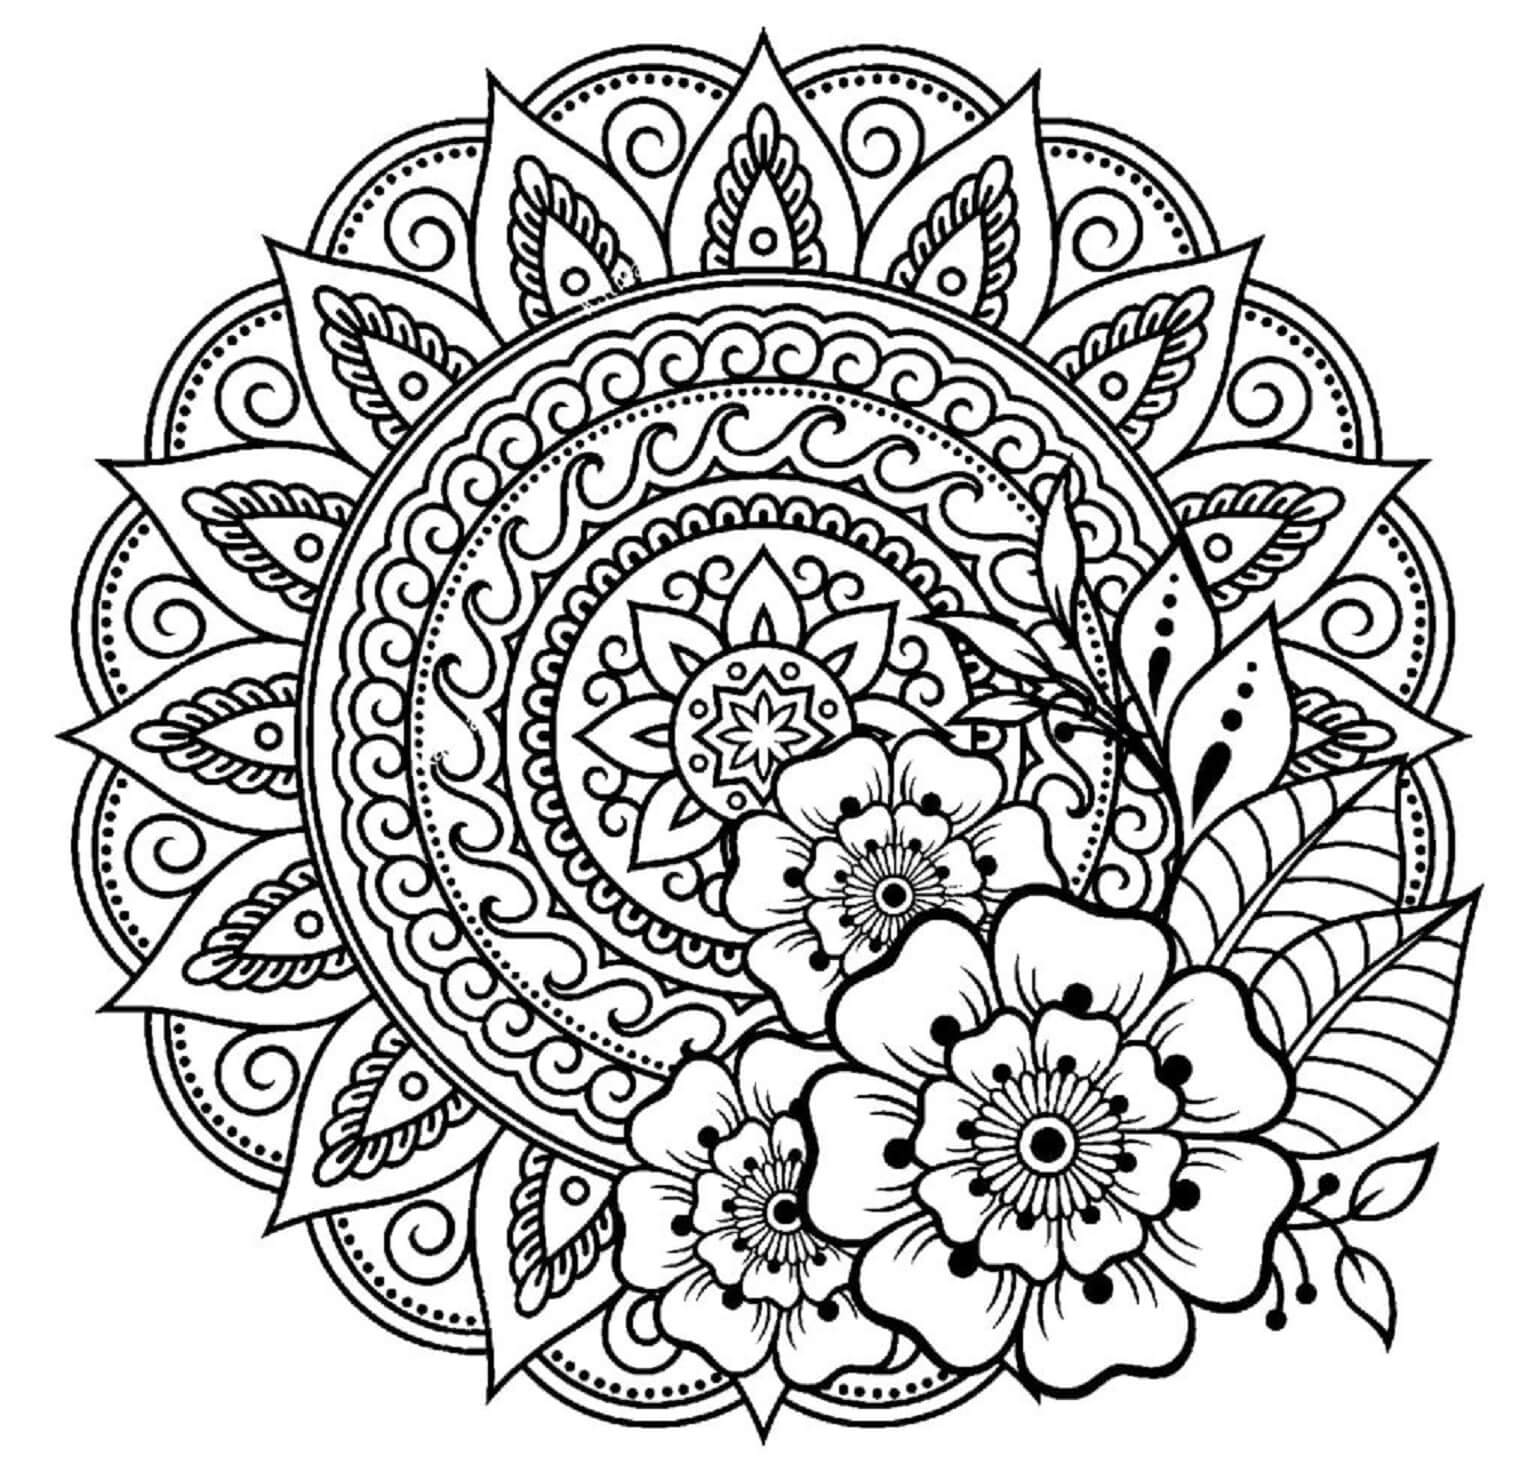 Mandala Rose Coloring Page - Sheet 6 Mandalas